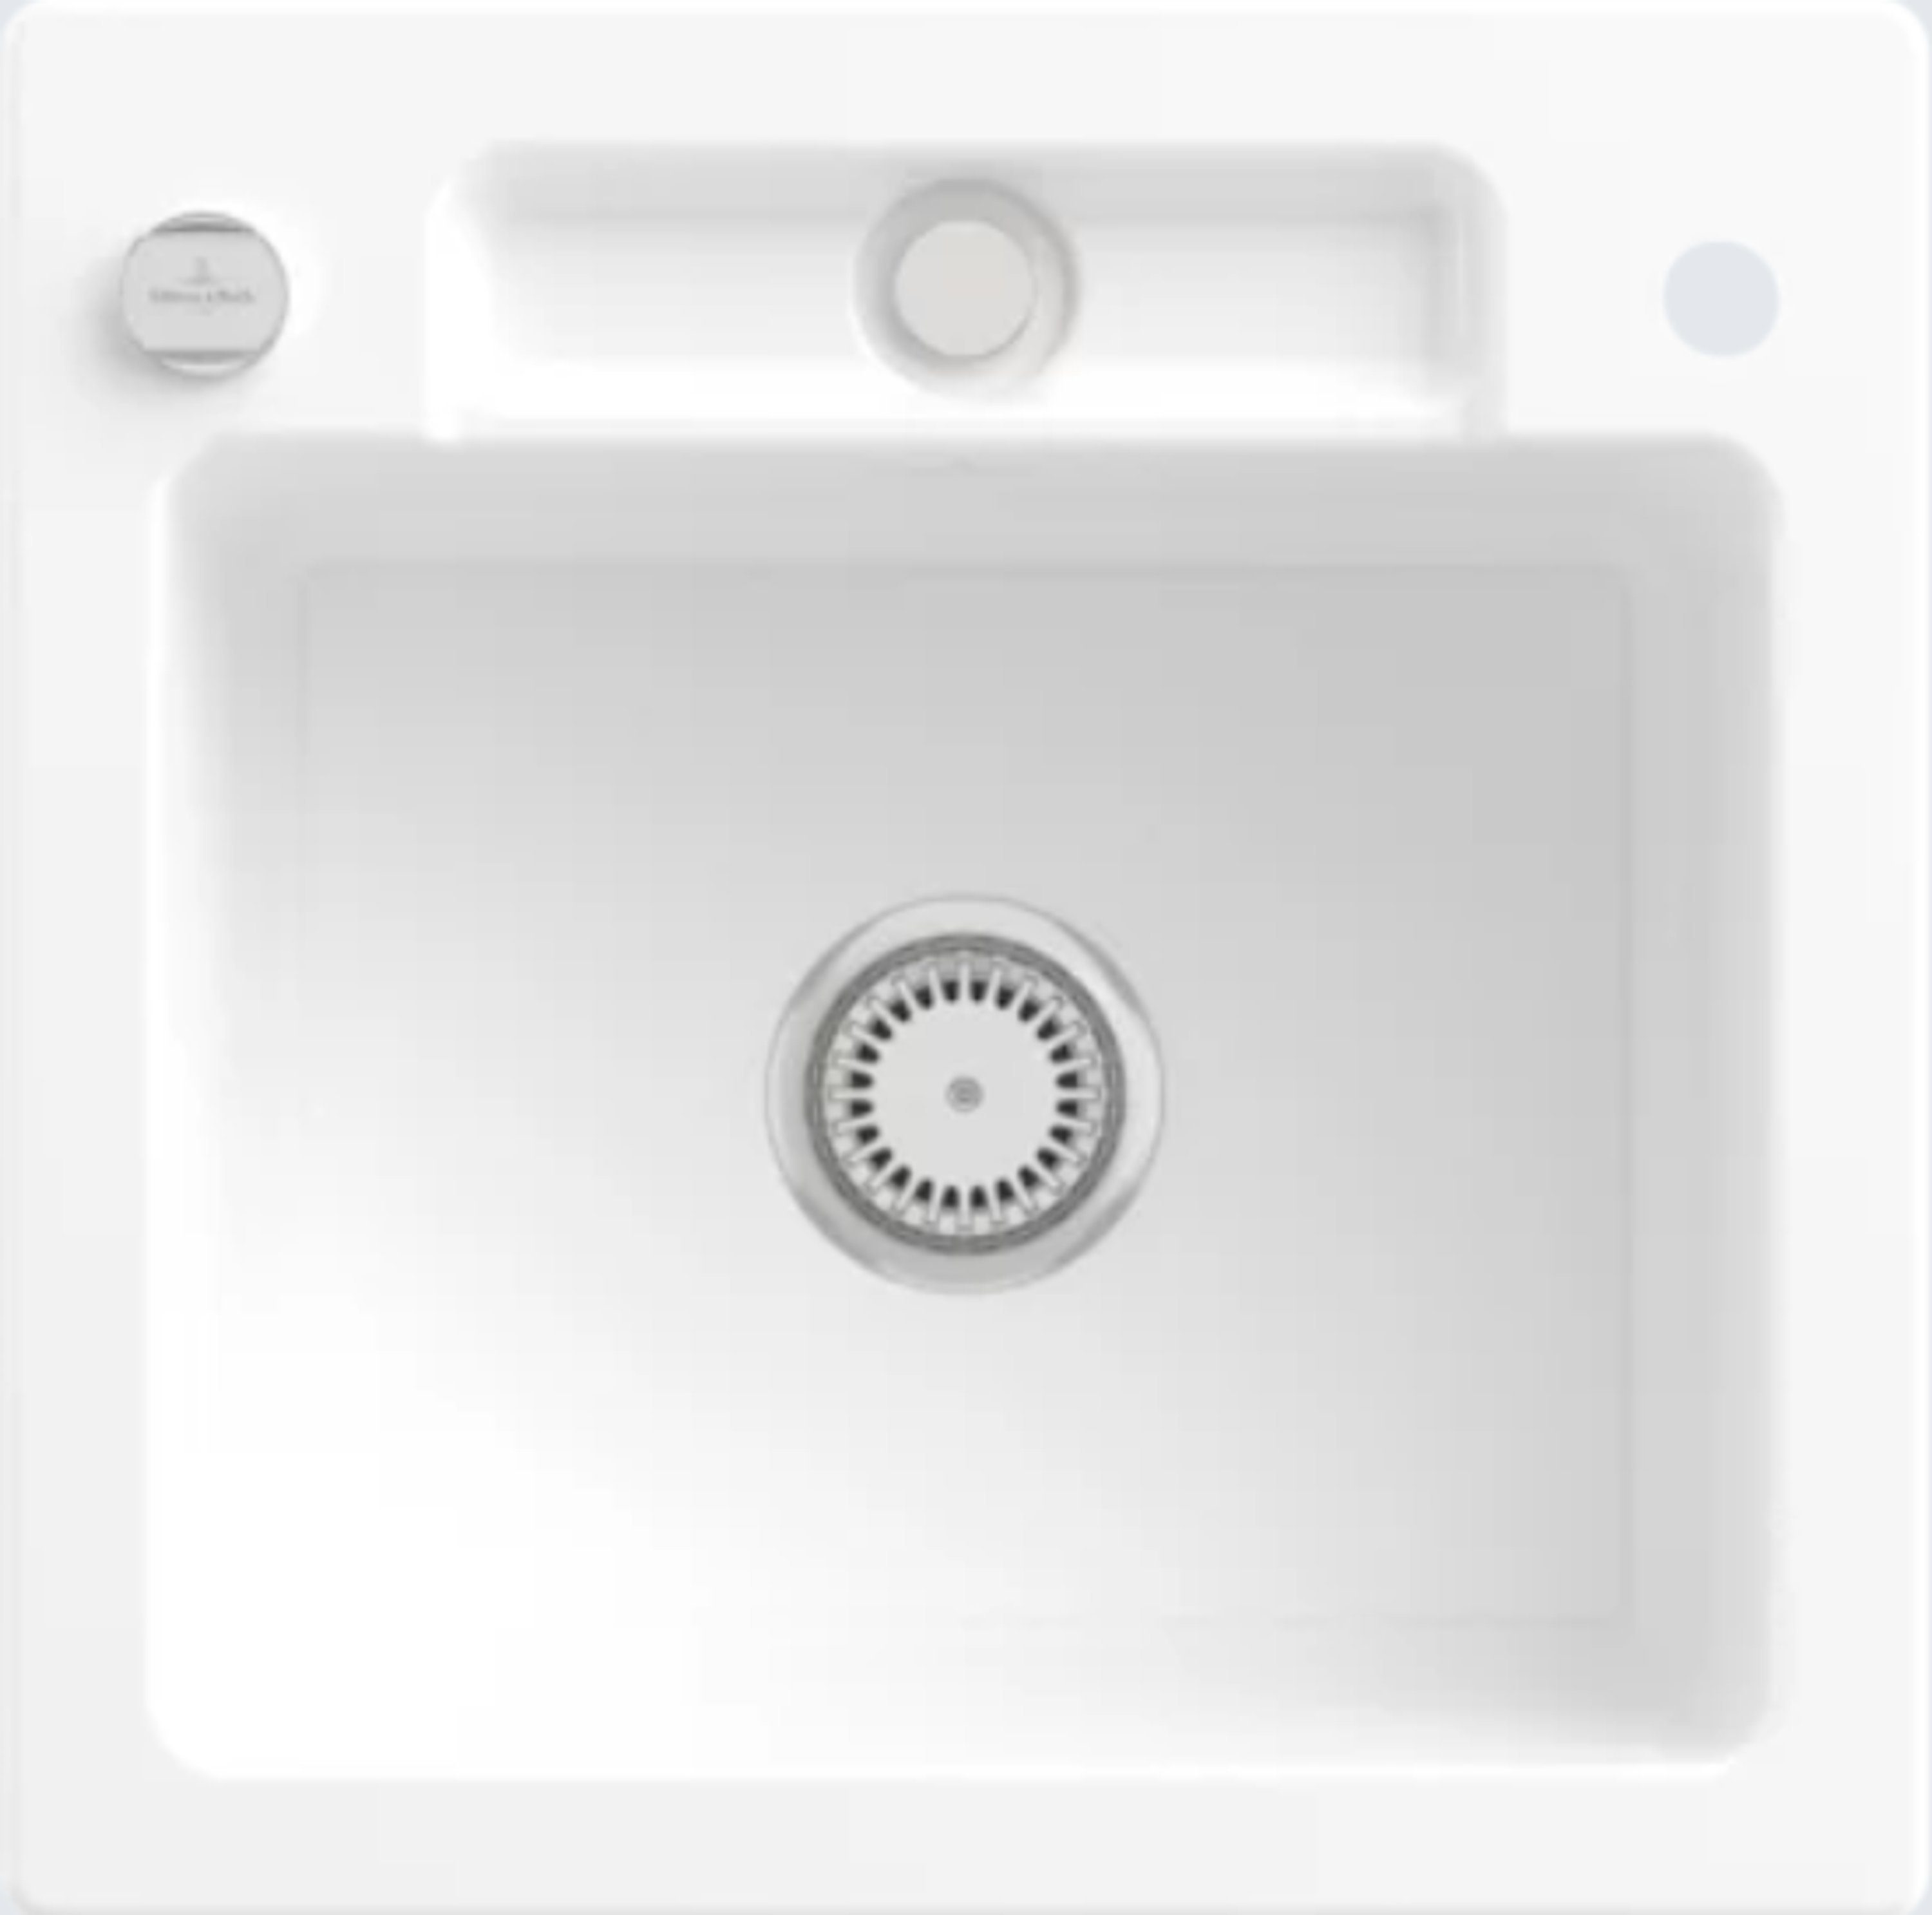 Villeroy & Boch Küchenspüle 3345 02 R1, Quadratisch, 51/22 cm, Siluet Serie, TitanCeram, flexibel drehbar